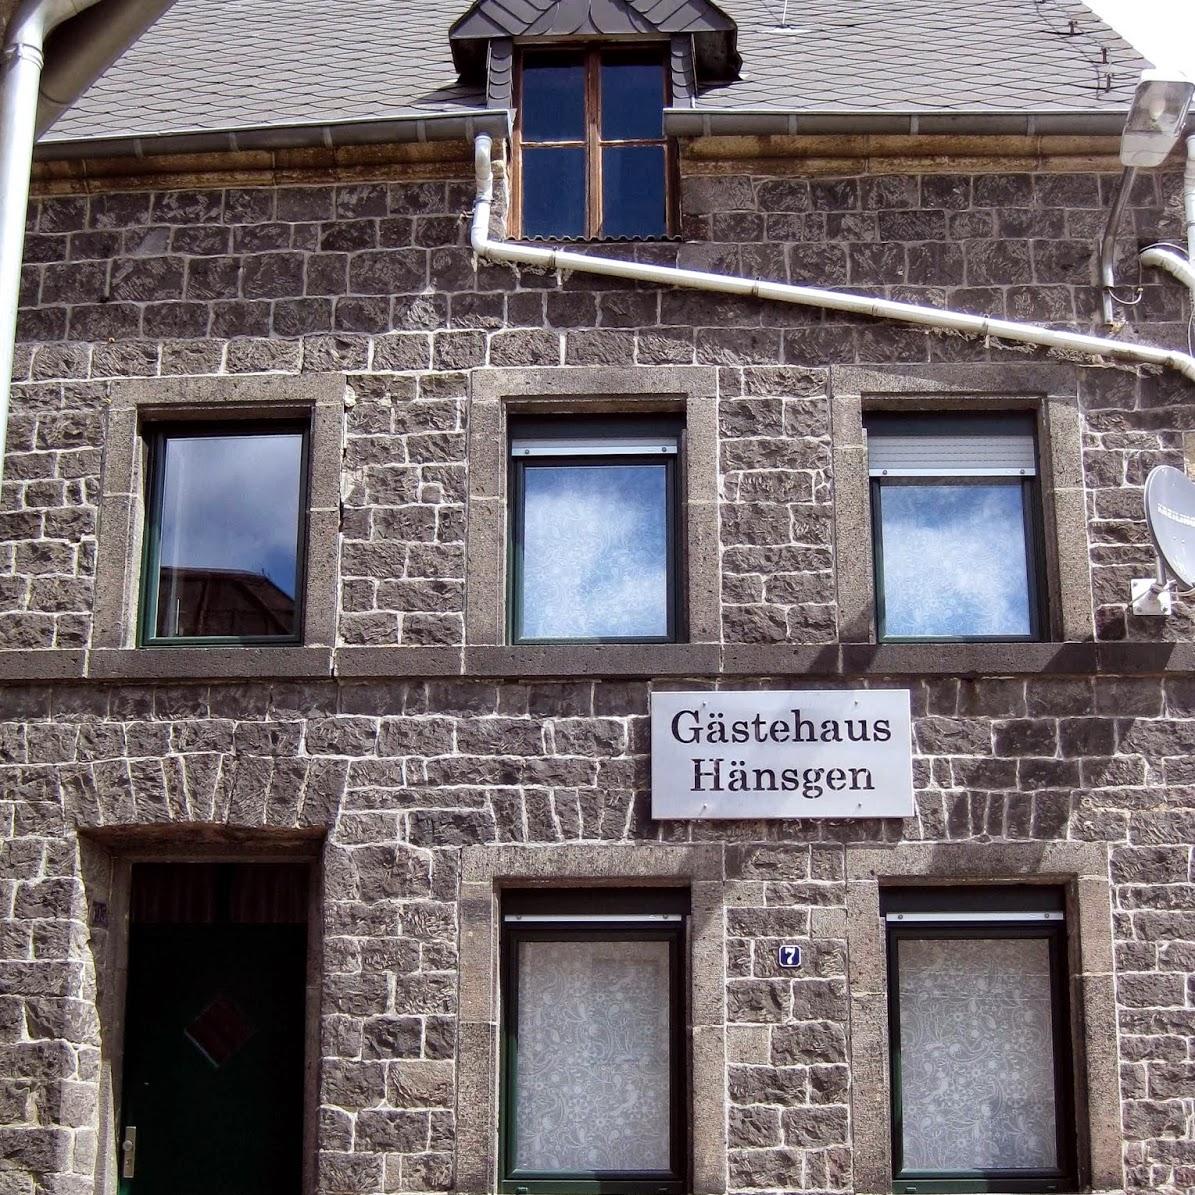 Restaurant "Gaestehaus Haensgen" in Ettringen